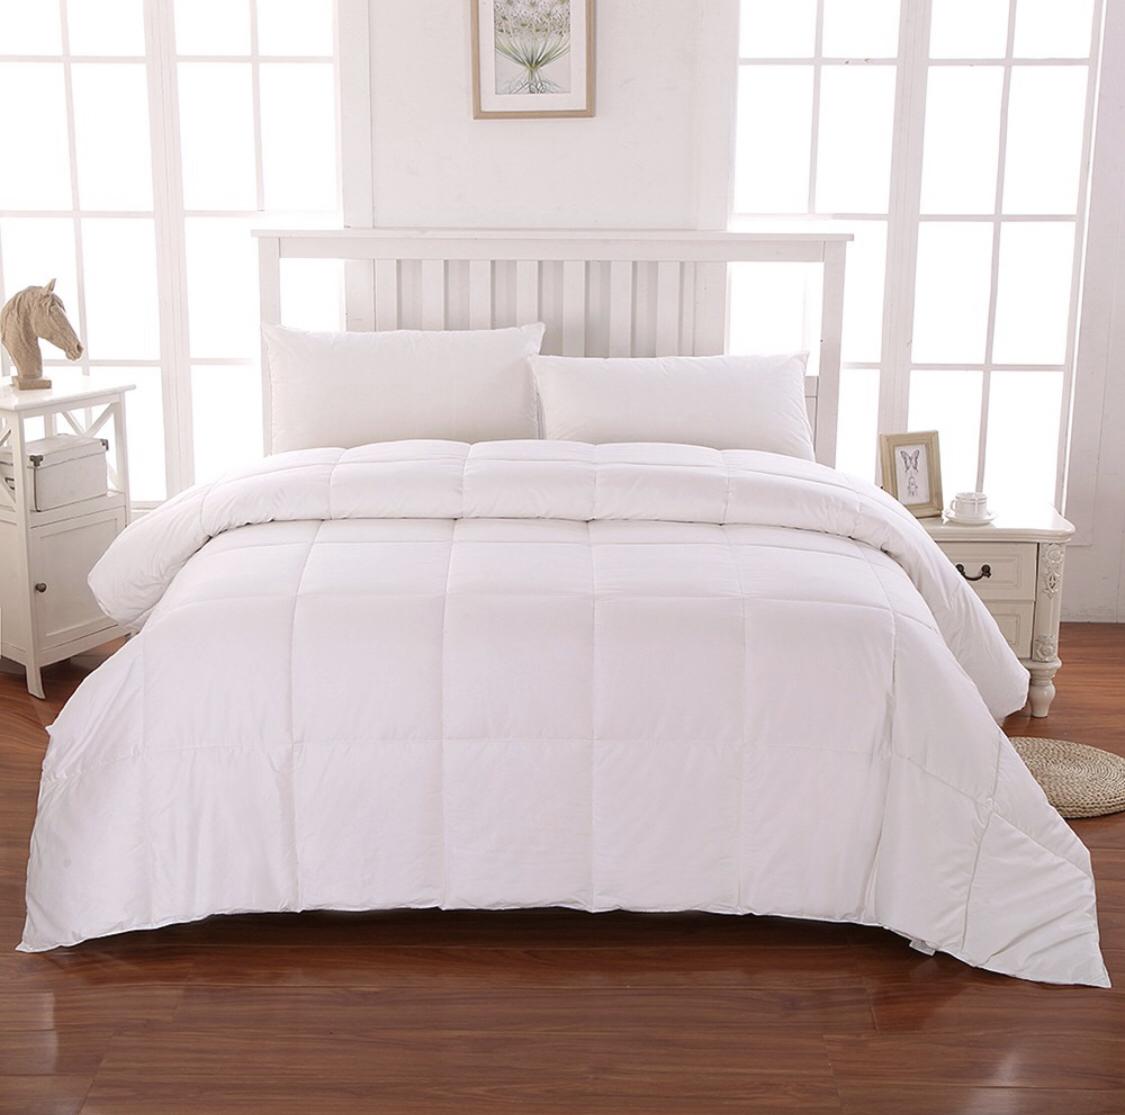 Cotton Loft White Down Alternative Medium Warmth Comforter - Queen/Full - Queen/Full